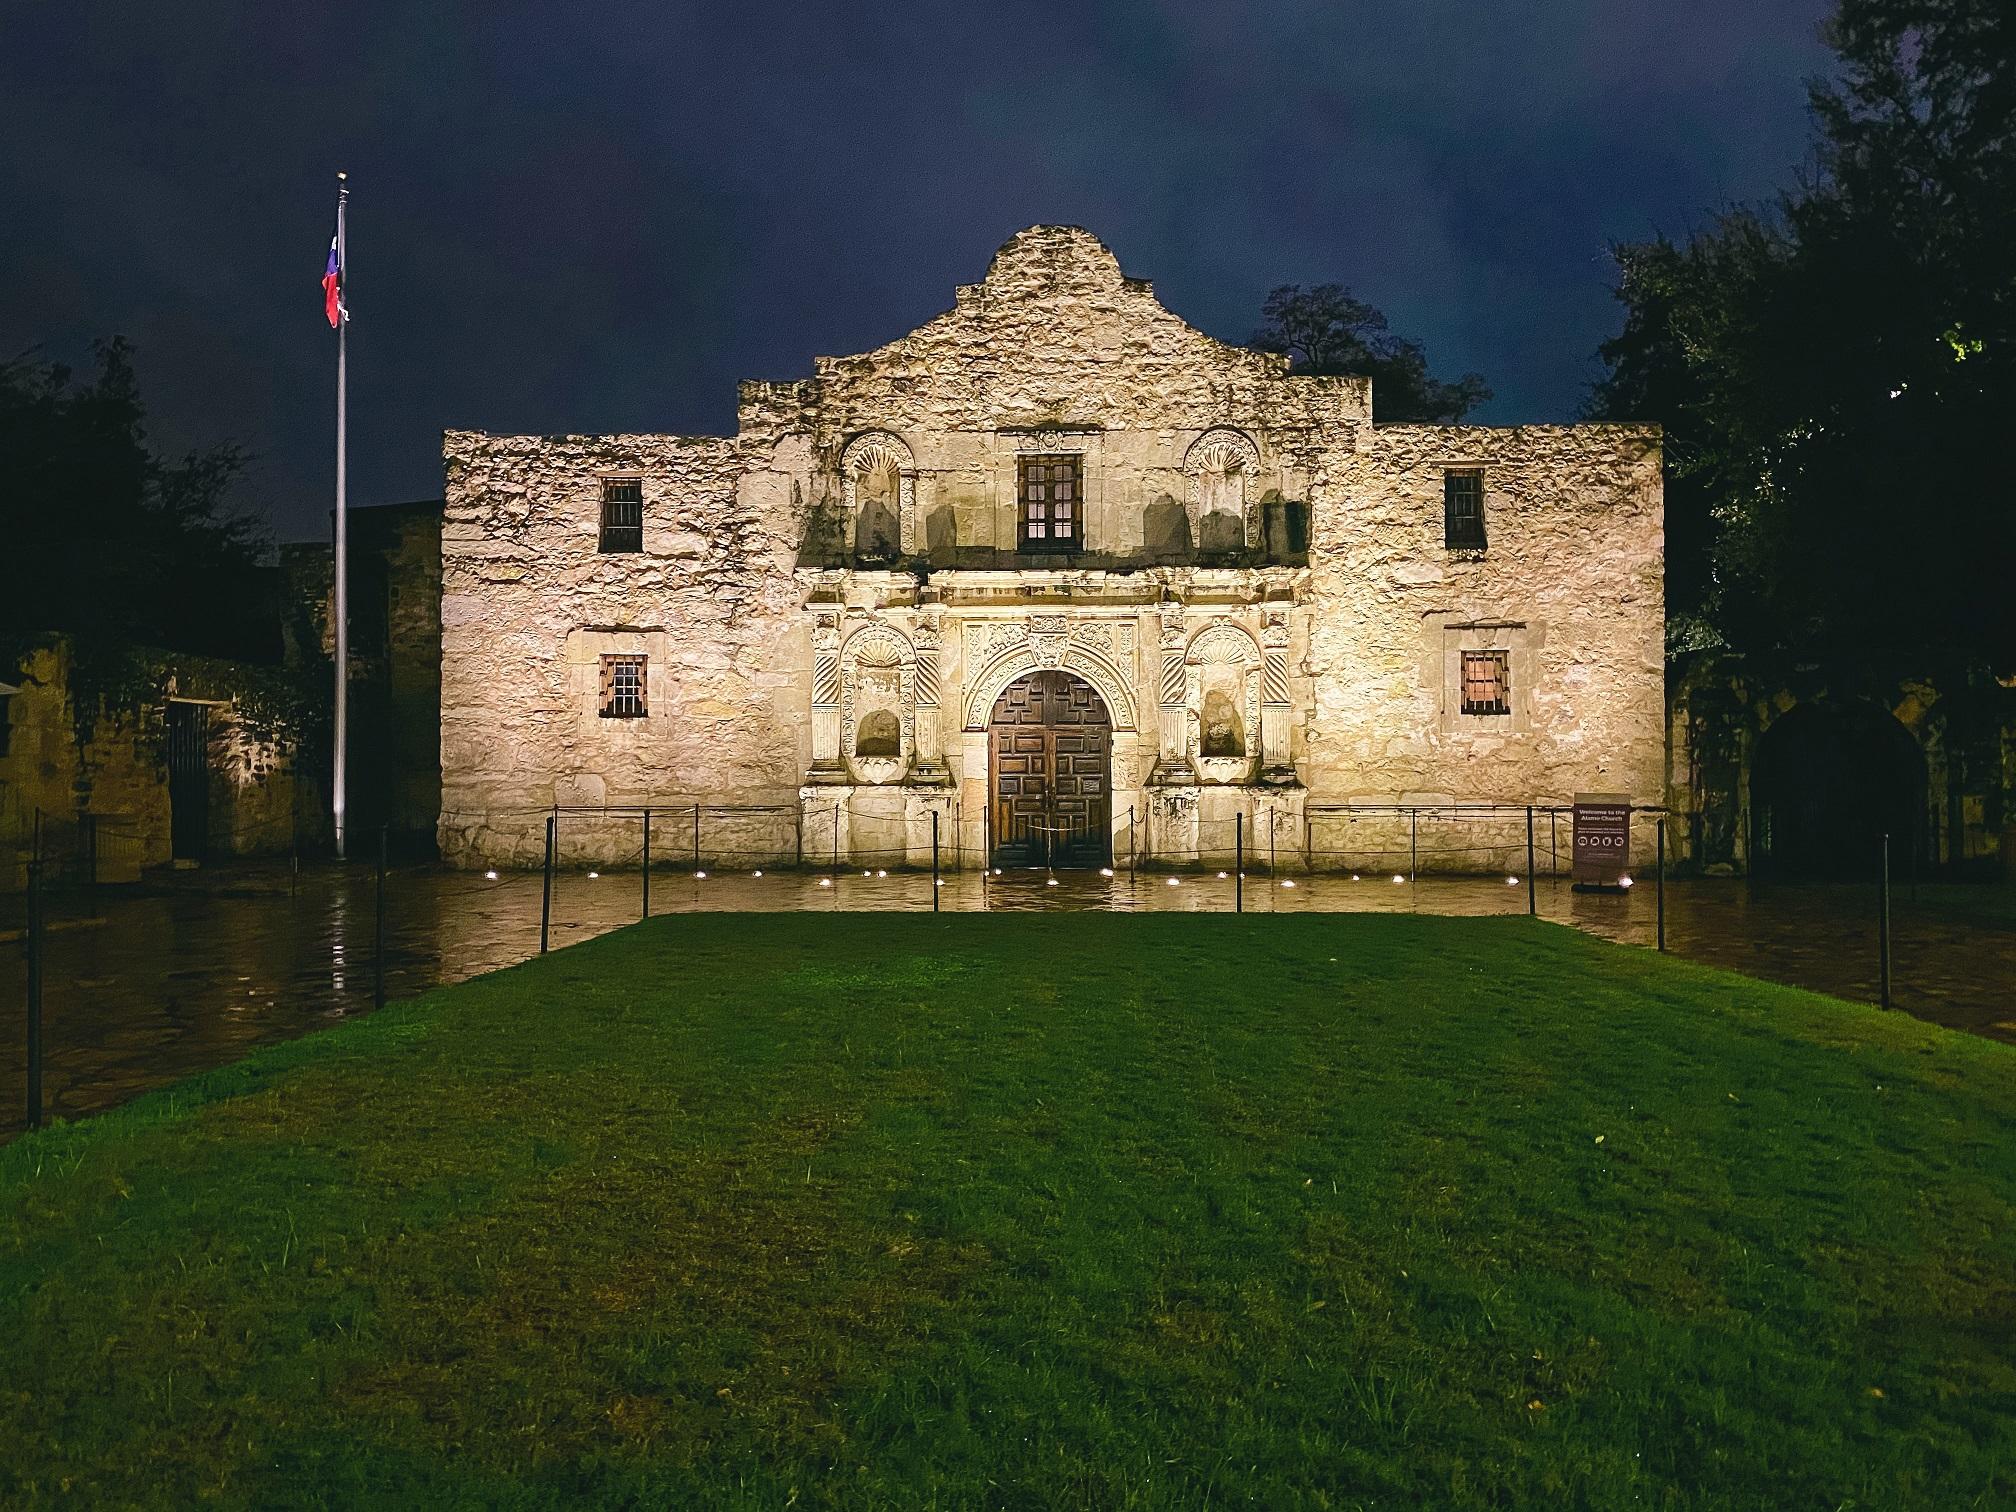 The Alamo San Antonio's Most Iconic Attraction